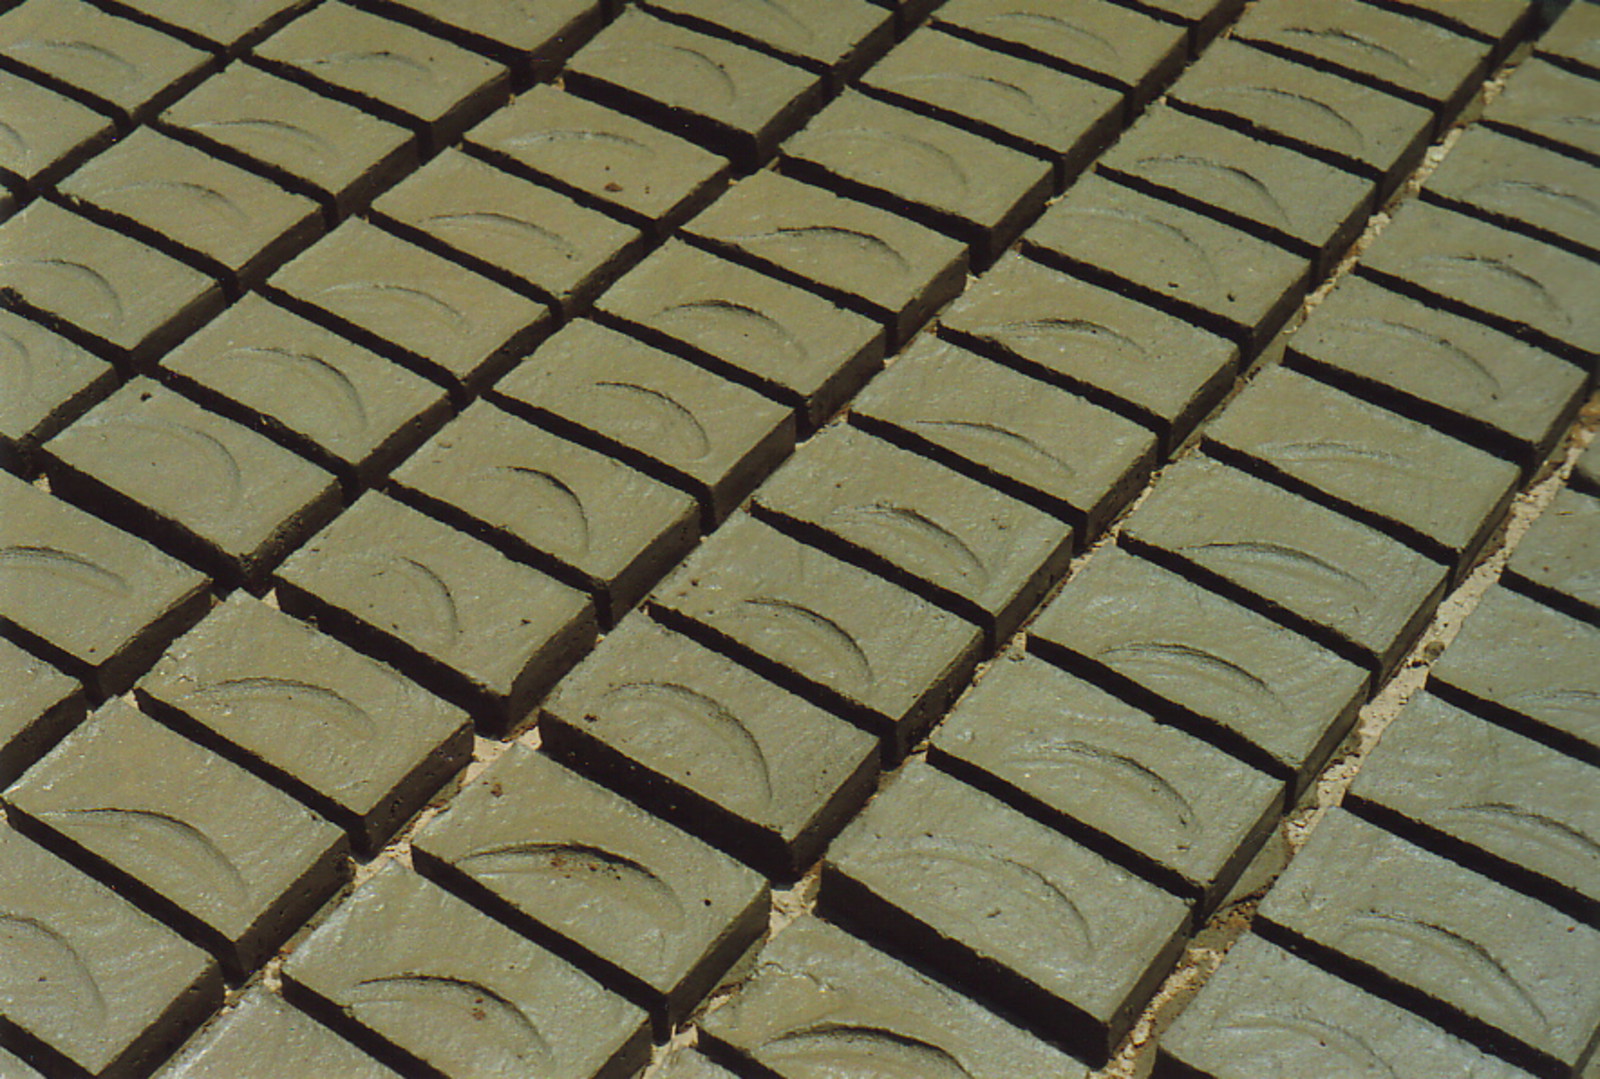 Bricks drying in the sun